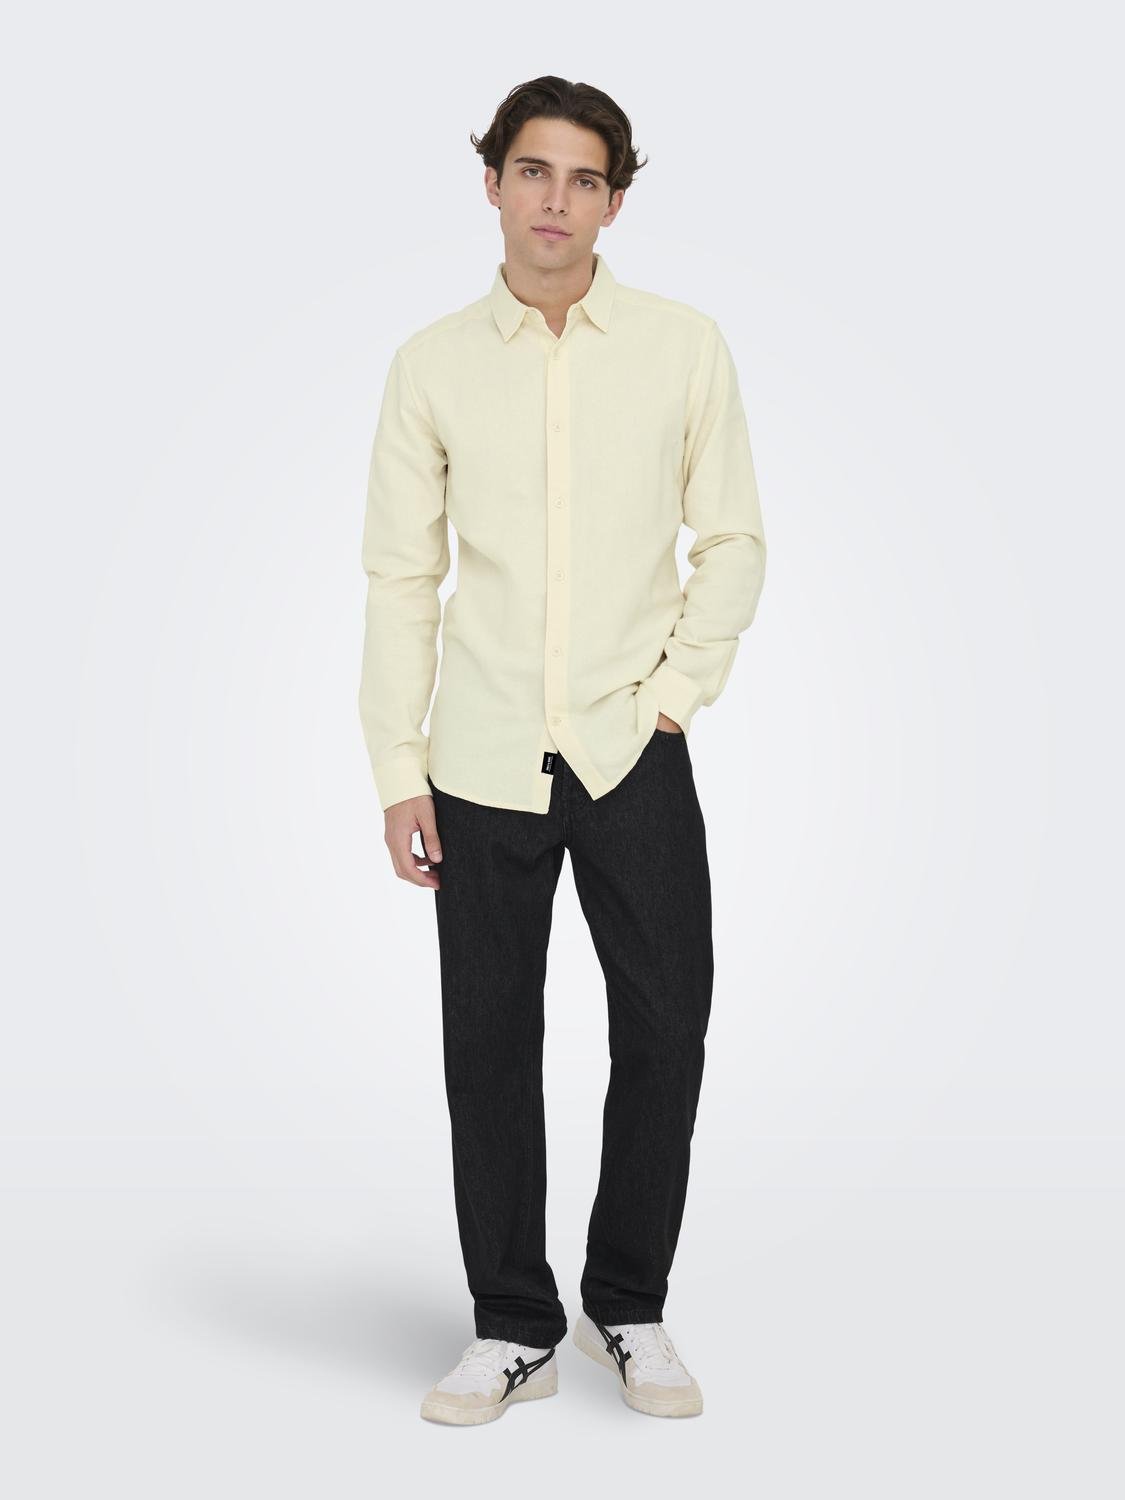 ONLY & SONS Regular Fit Shirt collar Shirt -Antique White - 22027786